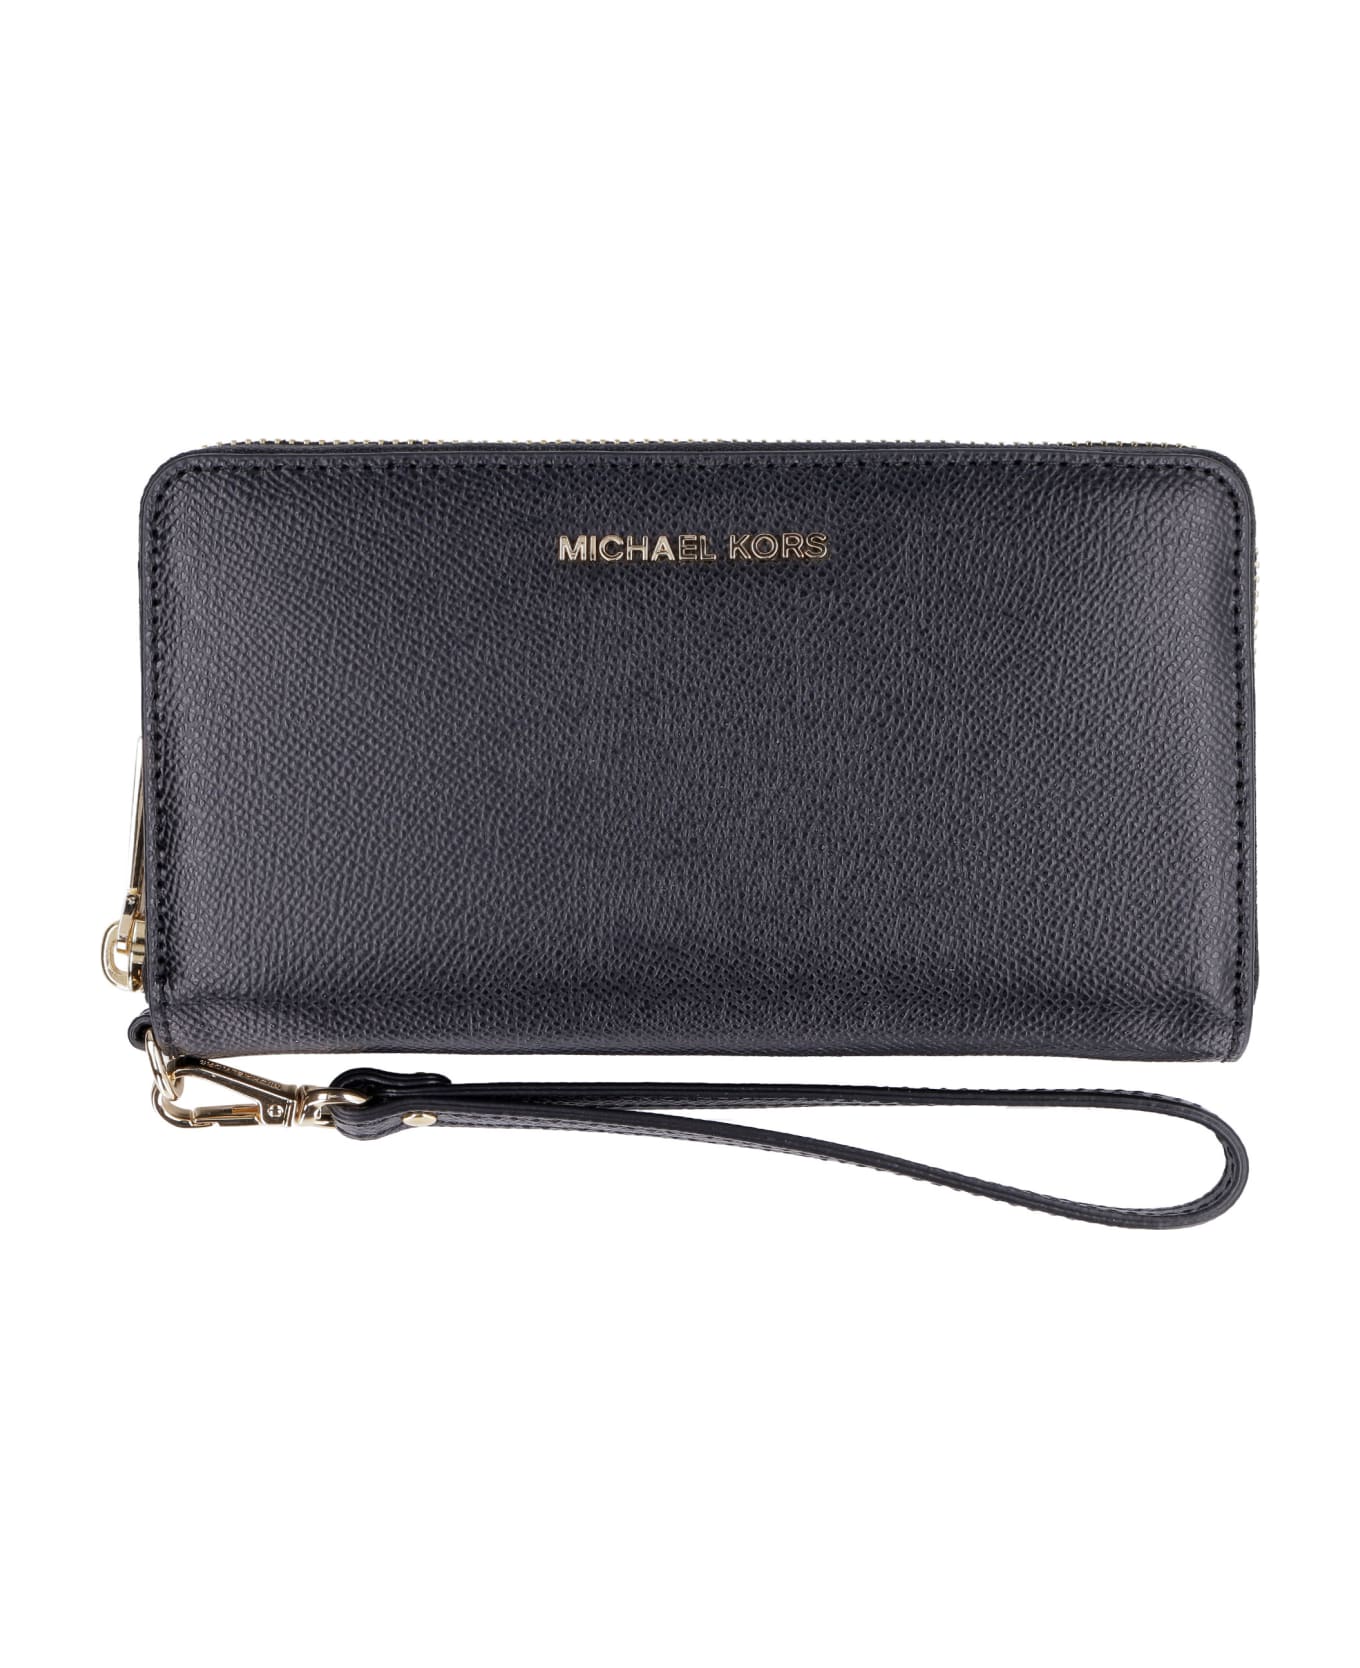 Michael Kors Leather Wallet - black